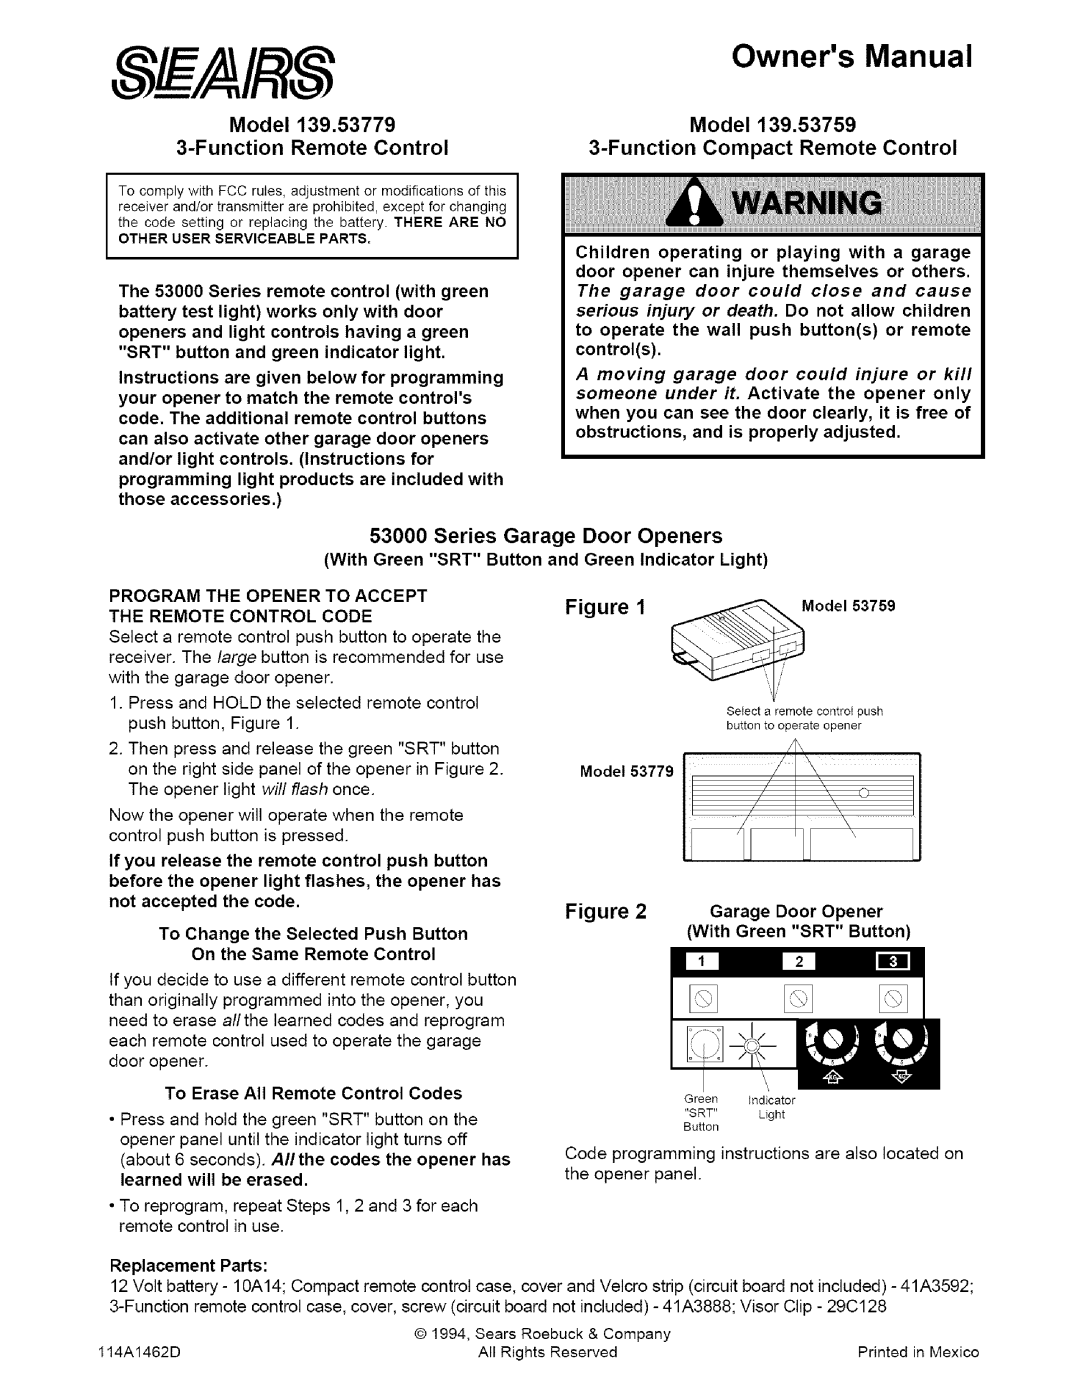 Sears 53000 owner manual Owners Manual, Model 3-Function Remote Control, Model 3-Function Compact Remote Control 